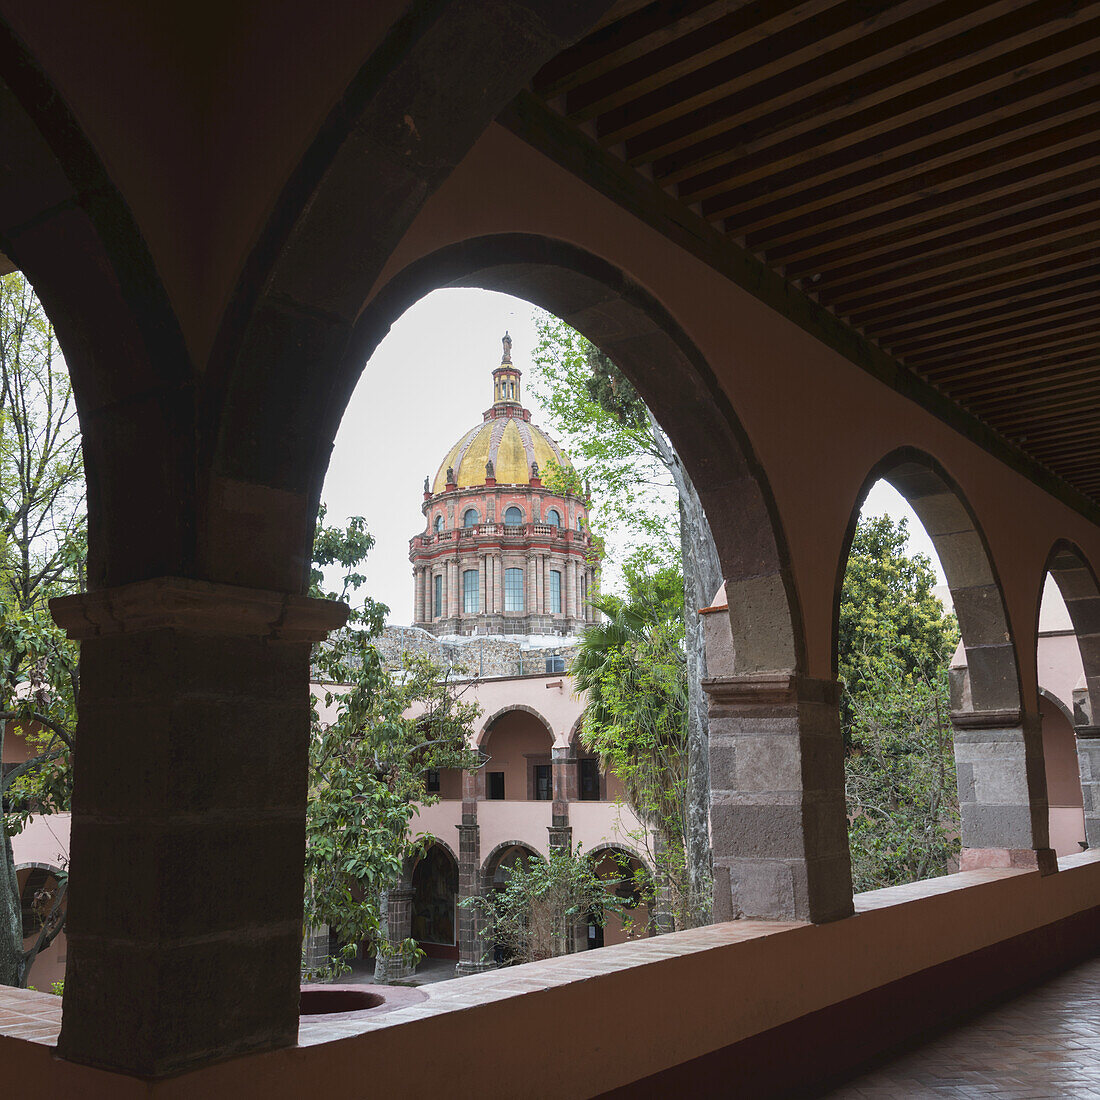 Bunte Nonnenkirche mit Kuppel durch Bögen betrachtet; San Miguel De Allende, Guanajuato, Mexiko